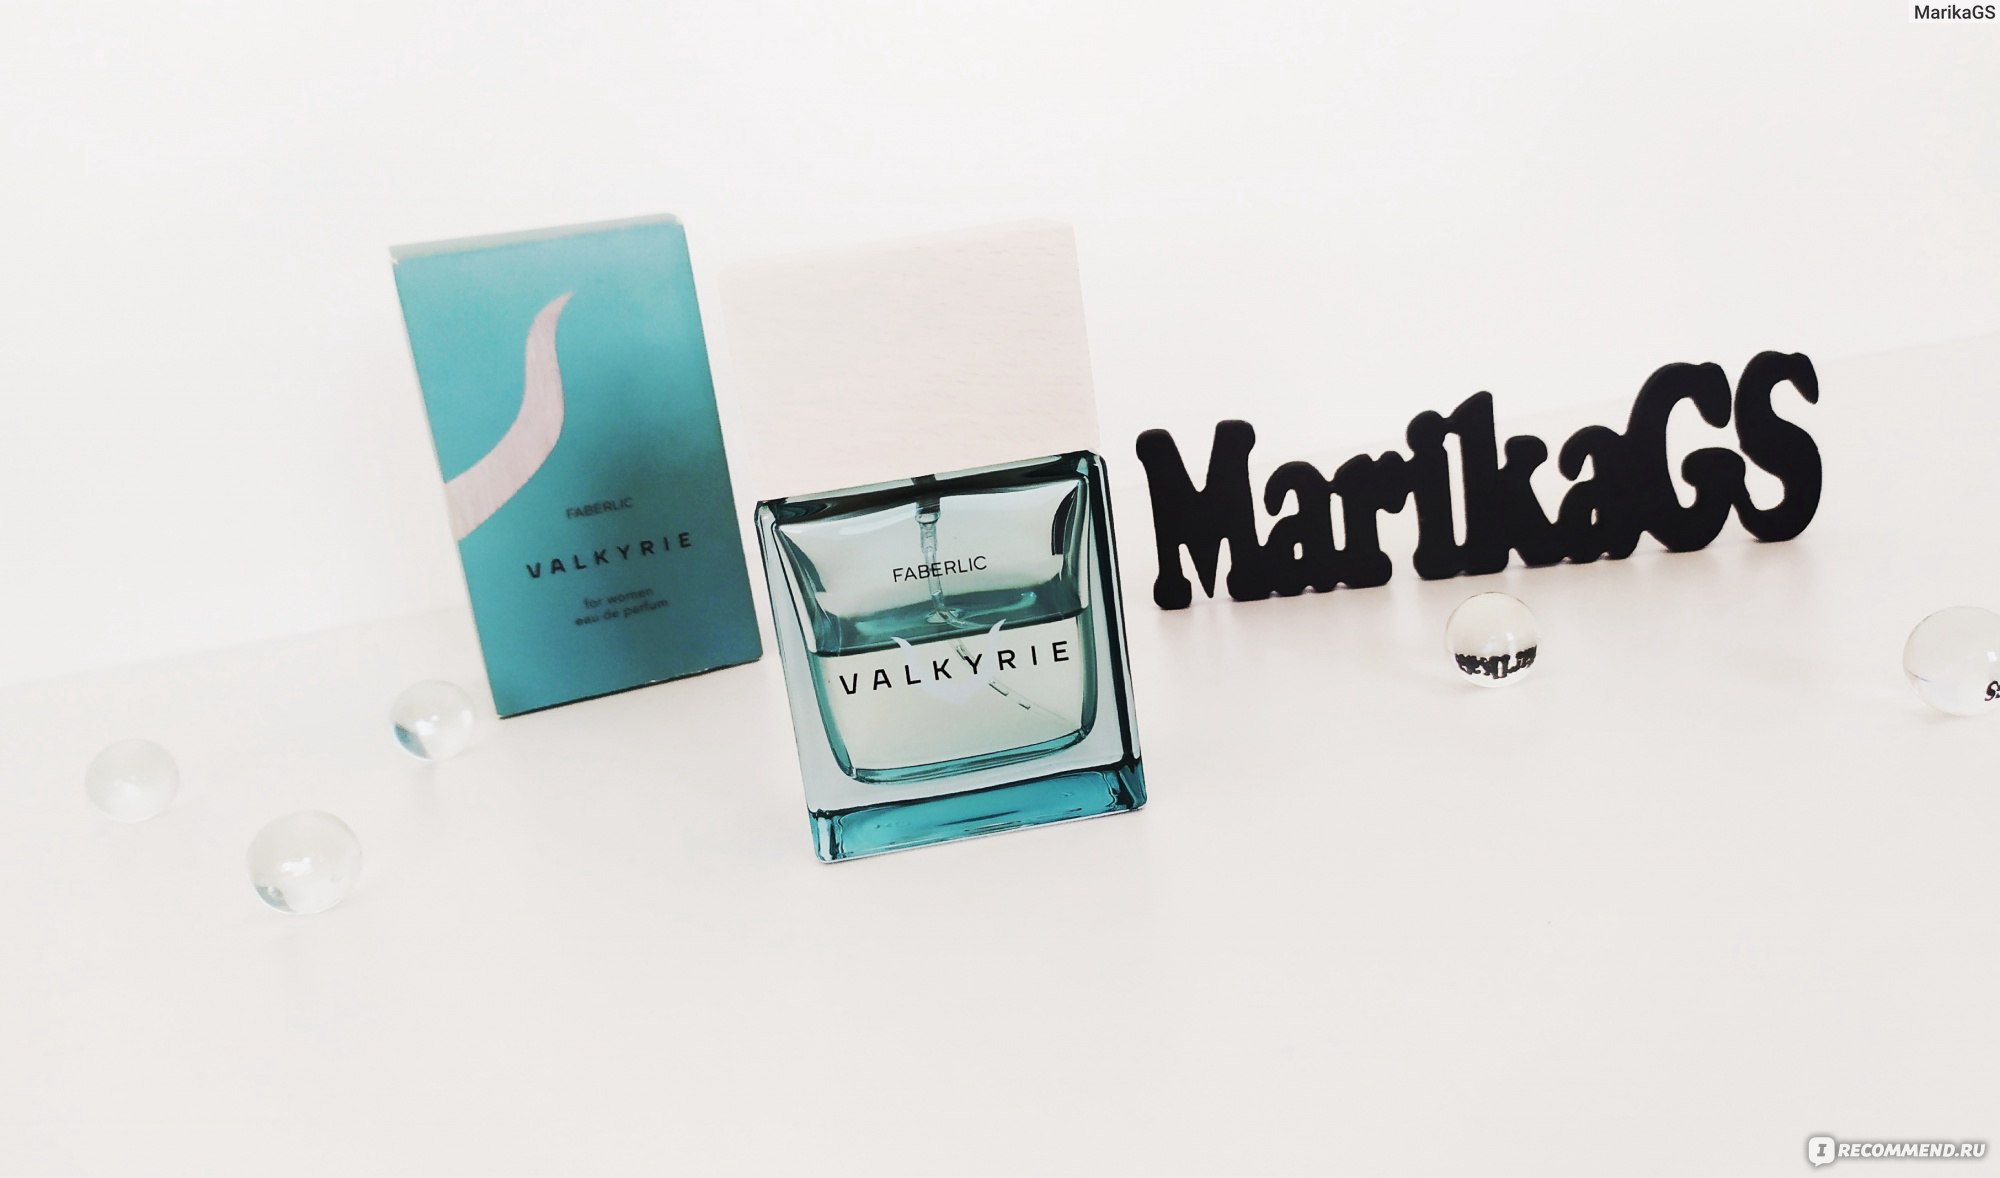 Faberlic Парфюмерная вода для женщин Valkyrie / Валькирия фото